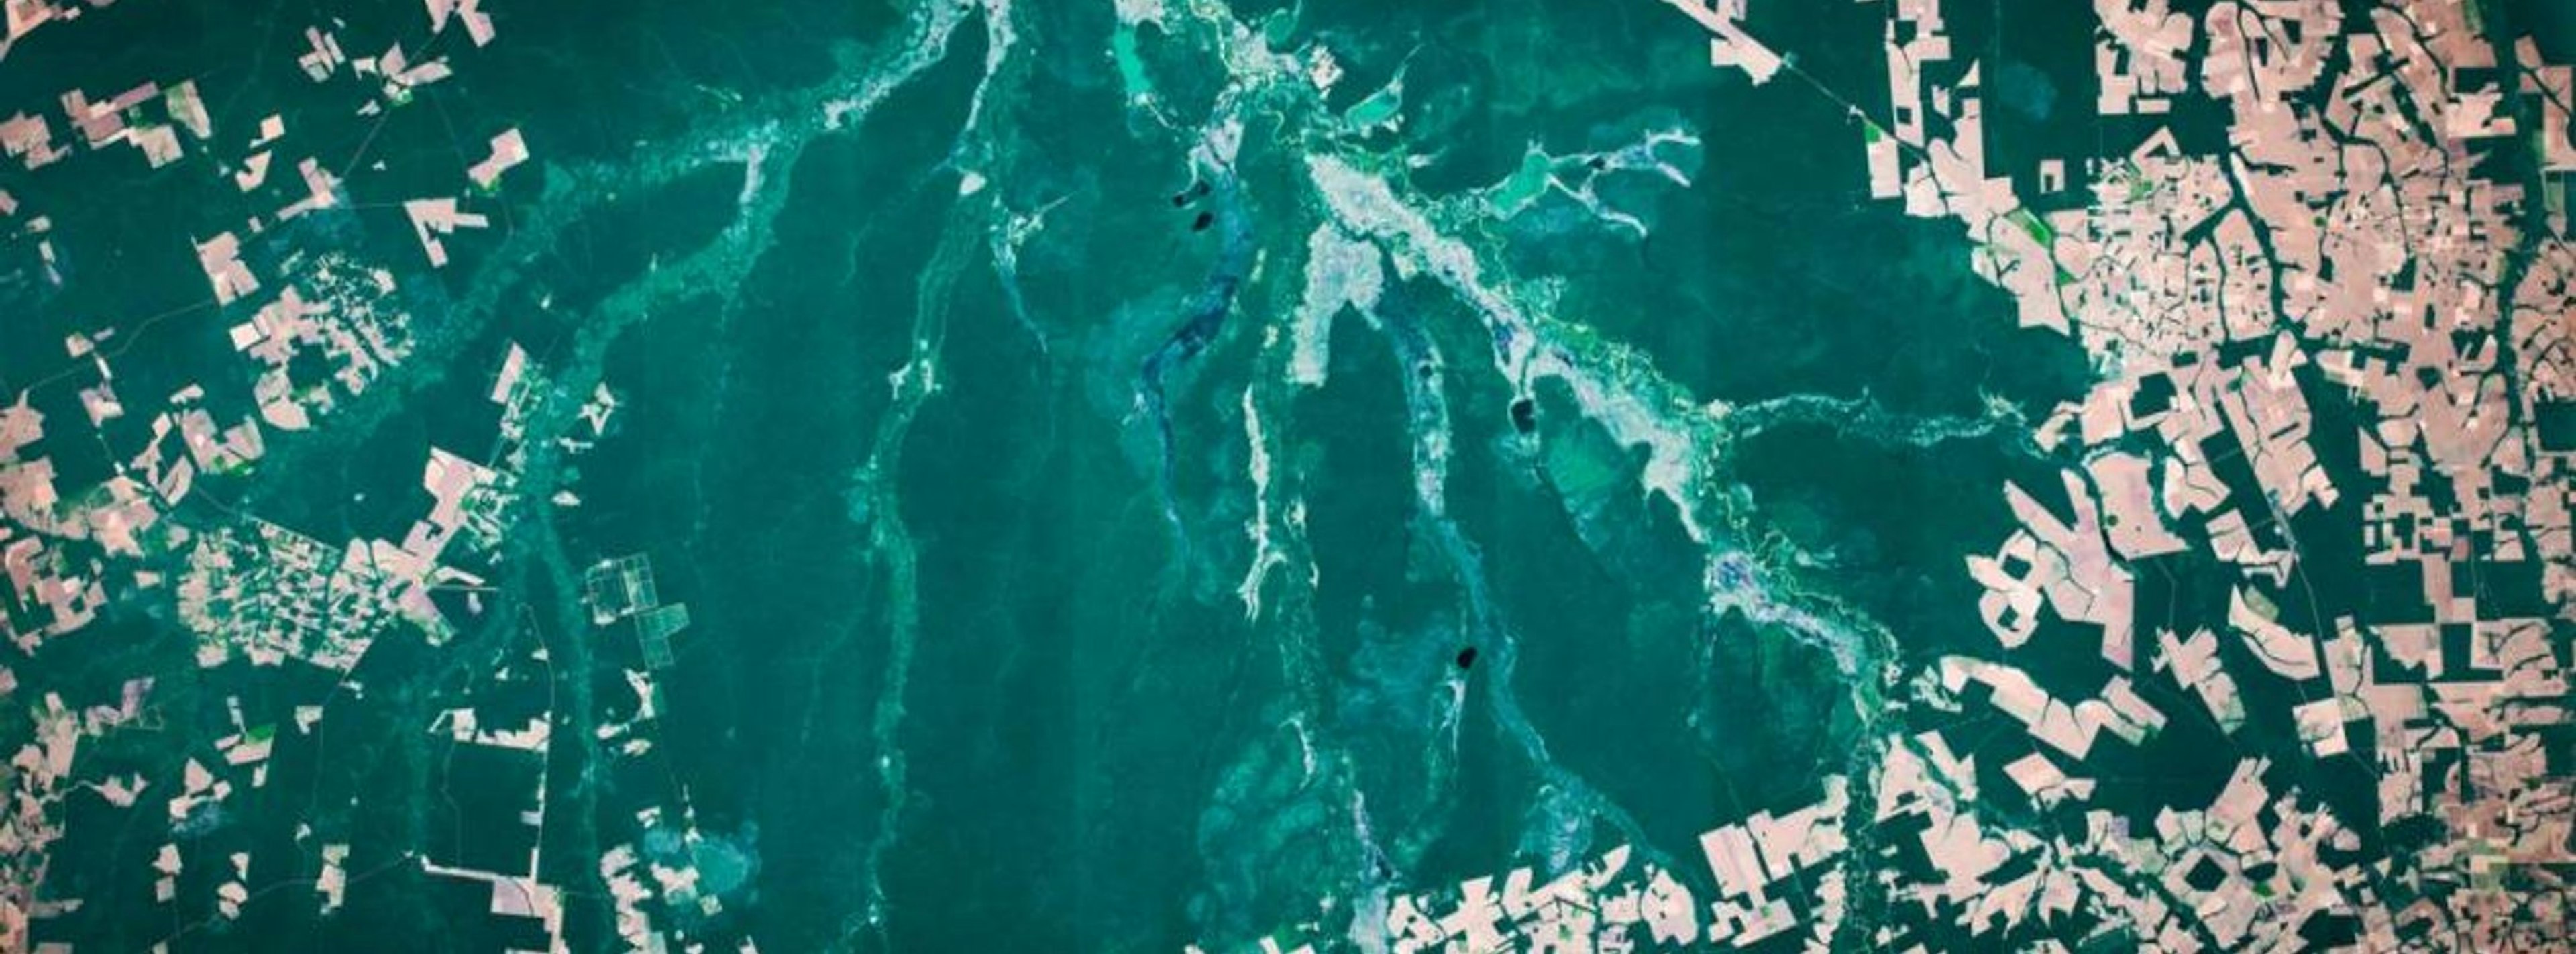 Aerial river image.